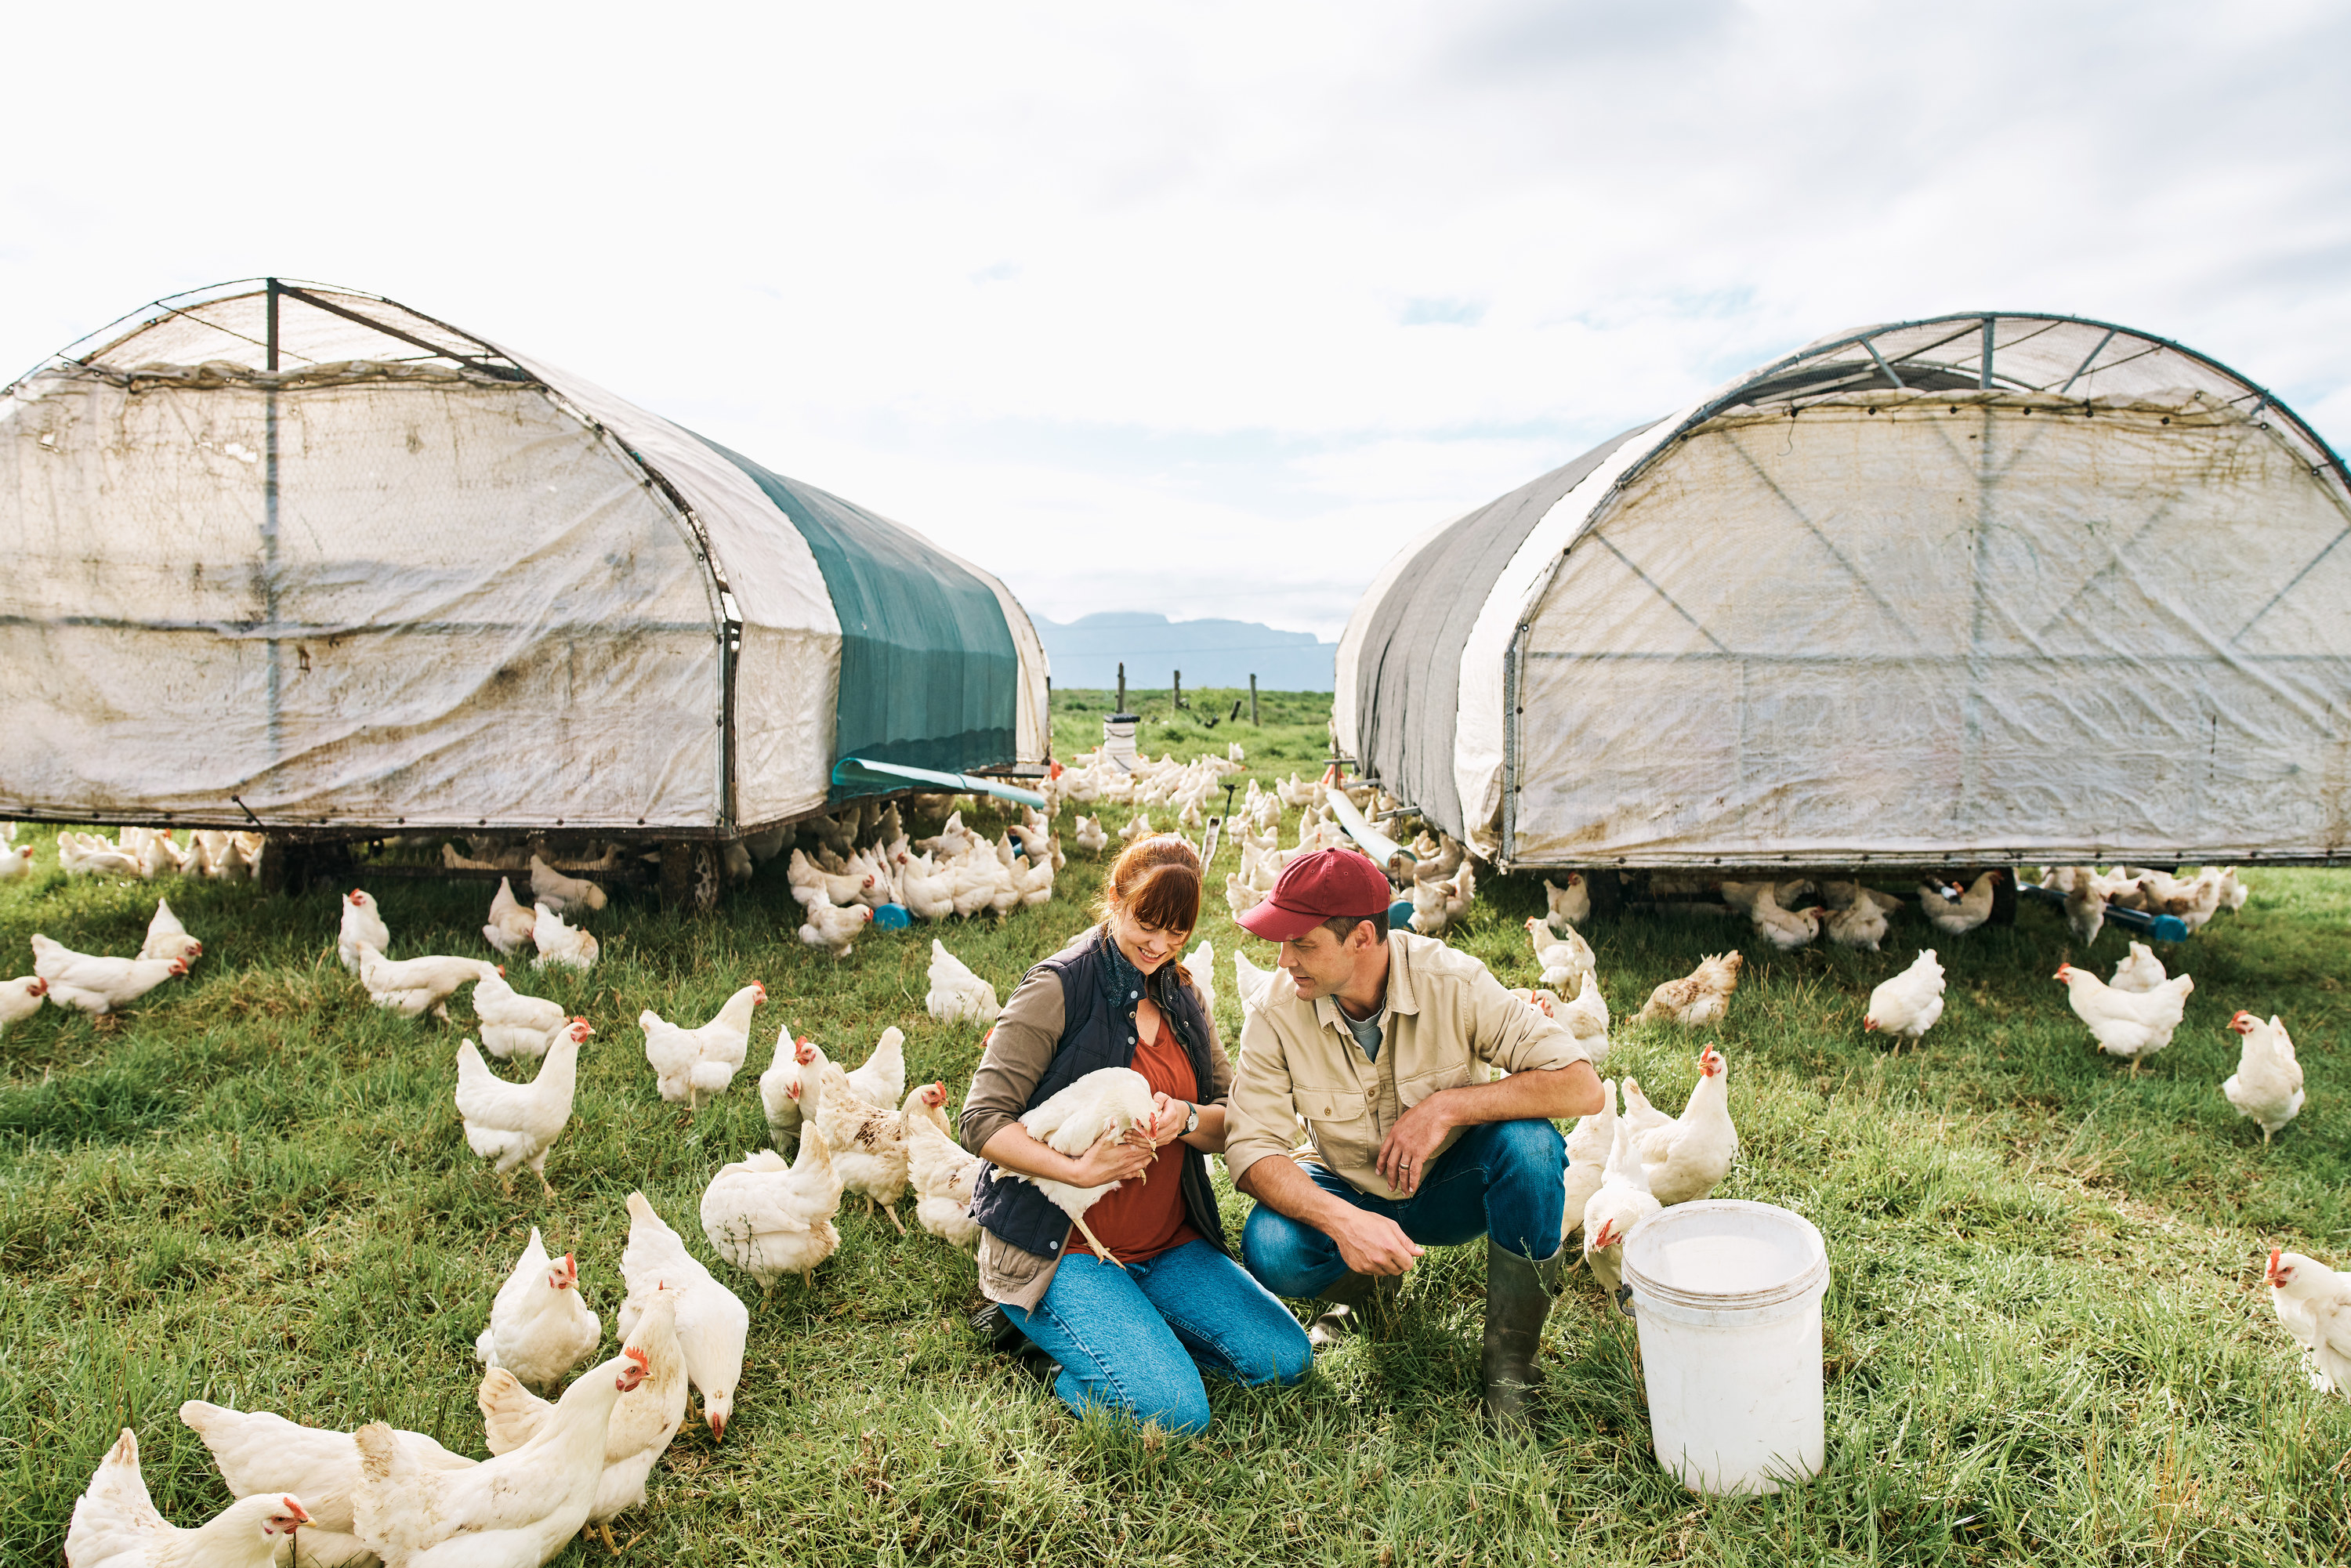 A couple feeding chickens on a farm